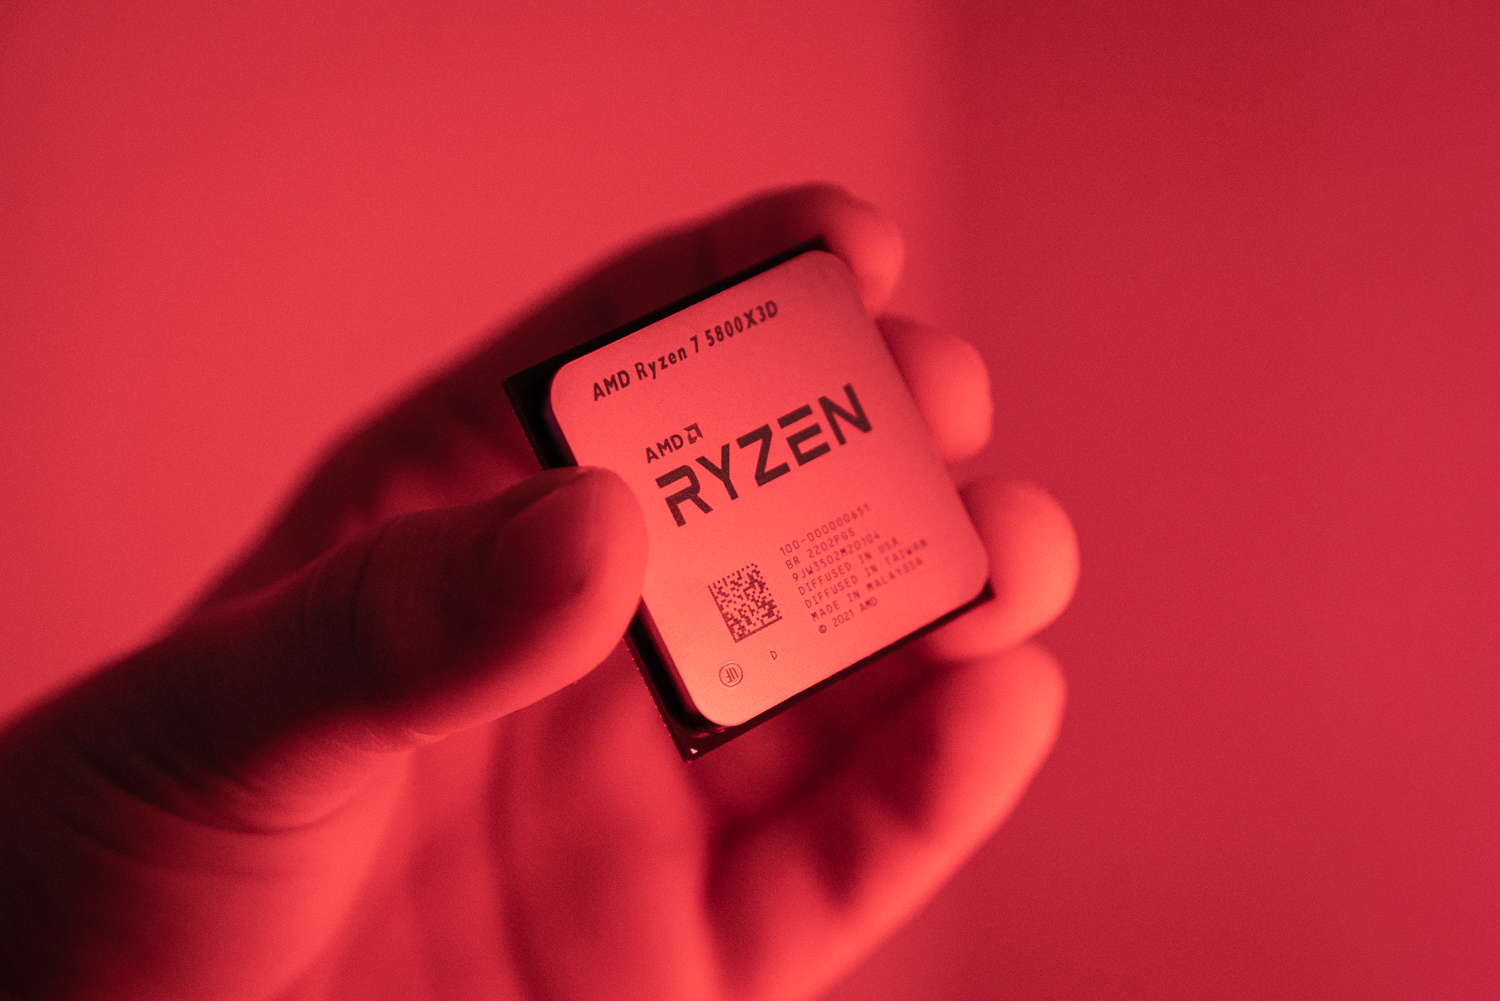 AMD Ryzen 7 5800X3D: Best for gaming? In practice, rarely 